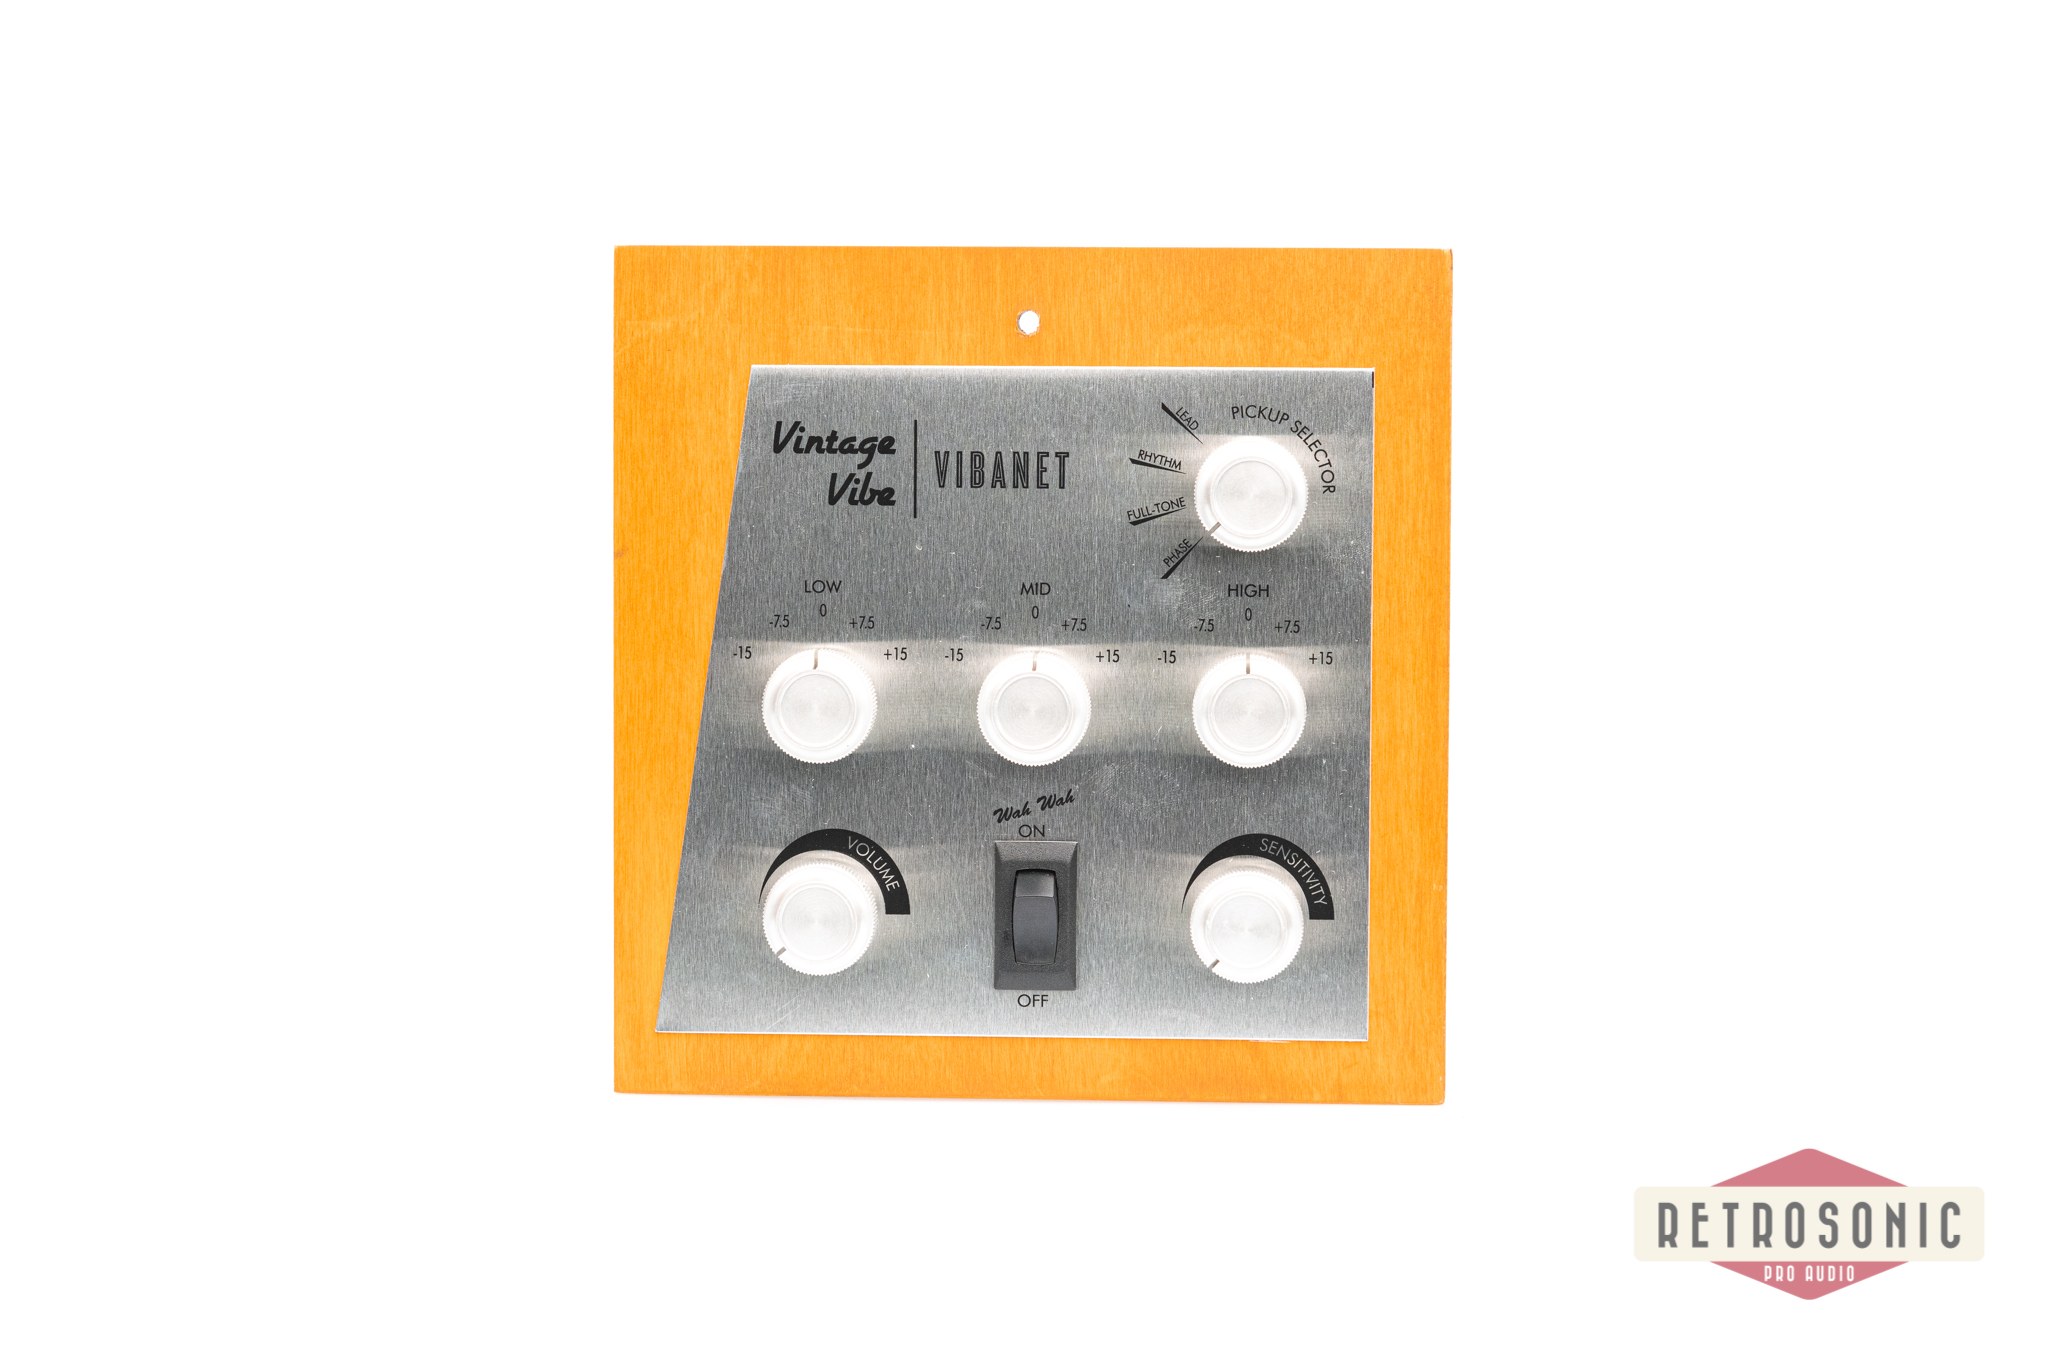 Vintage Vibe Vibanet Preamp for Hohner D6 Clavinet